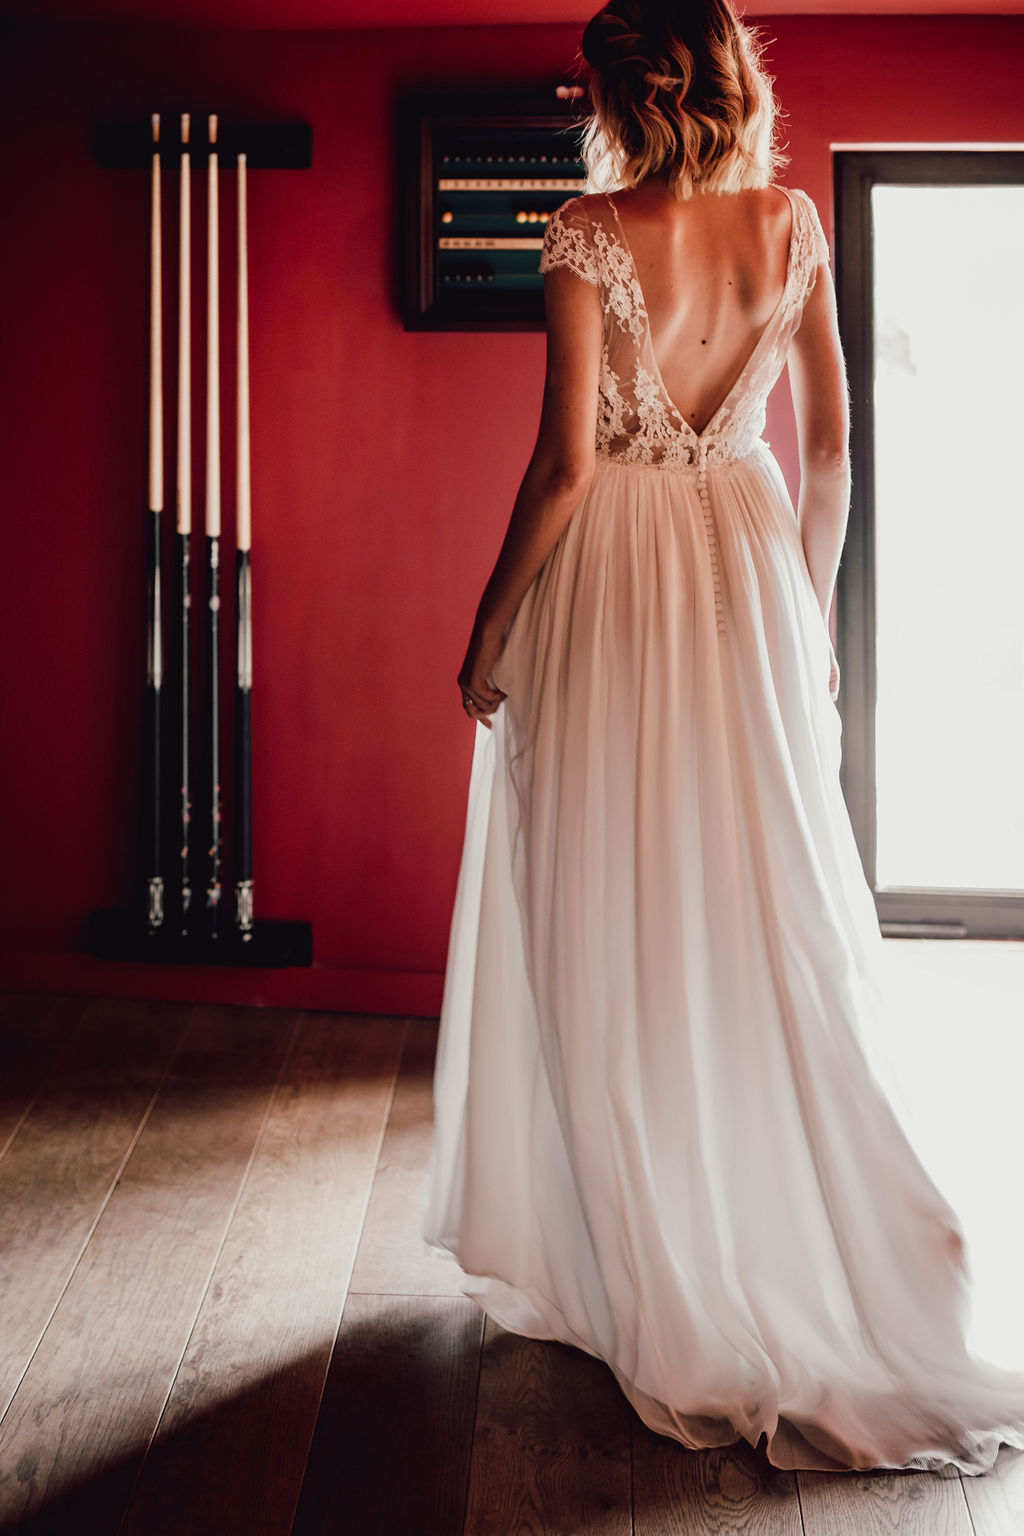 Camille Recolin Collection 2020 - Robes de mariée - Blog Mariage Madame C